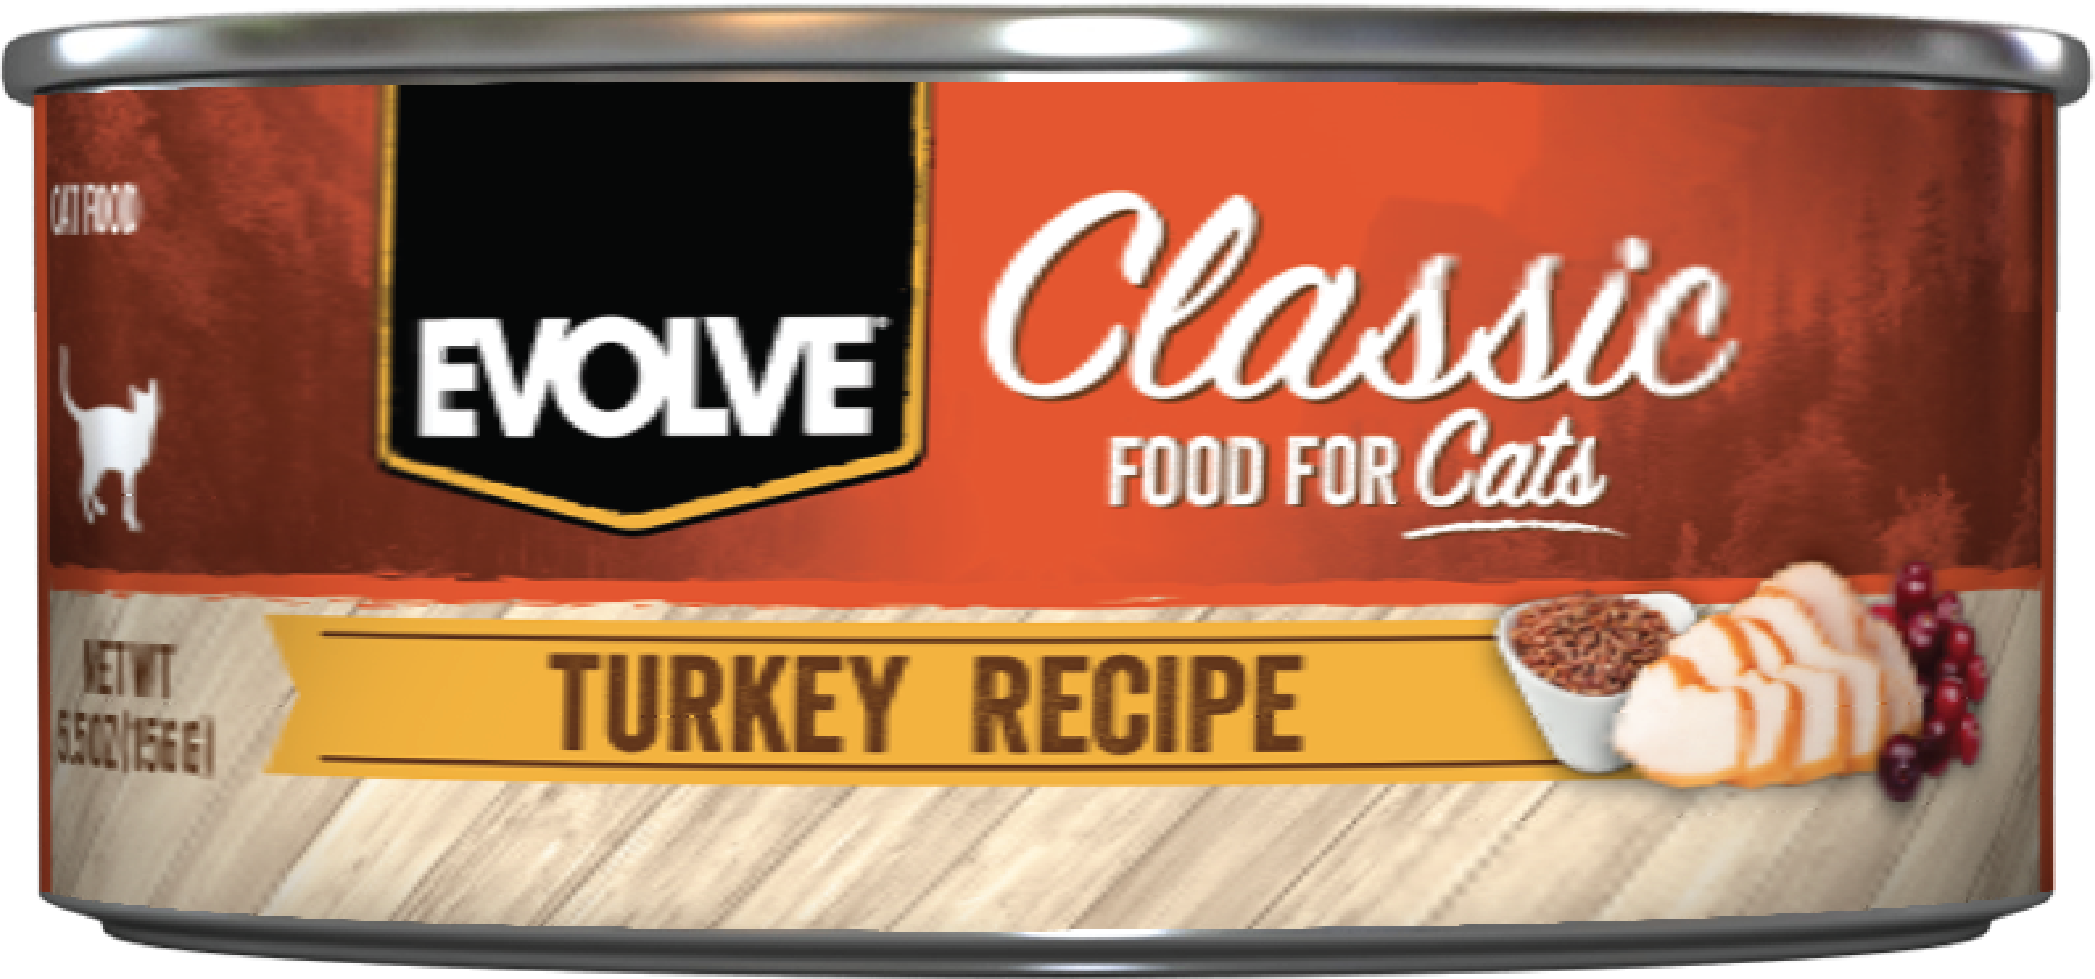 Evolve Classic Turkey Recipe